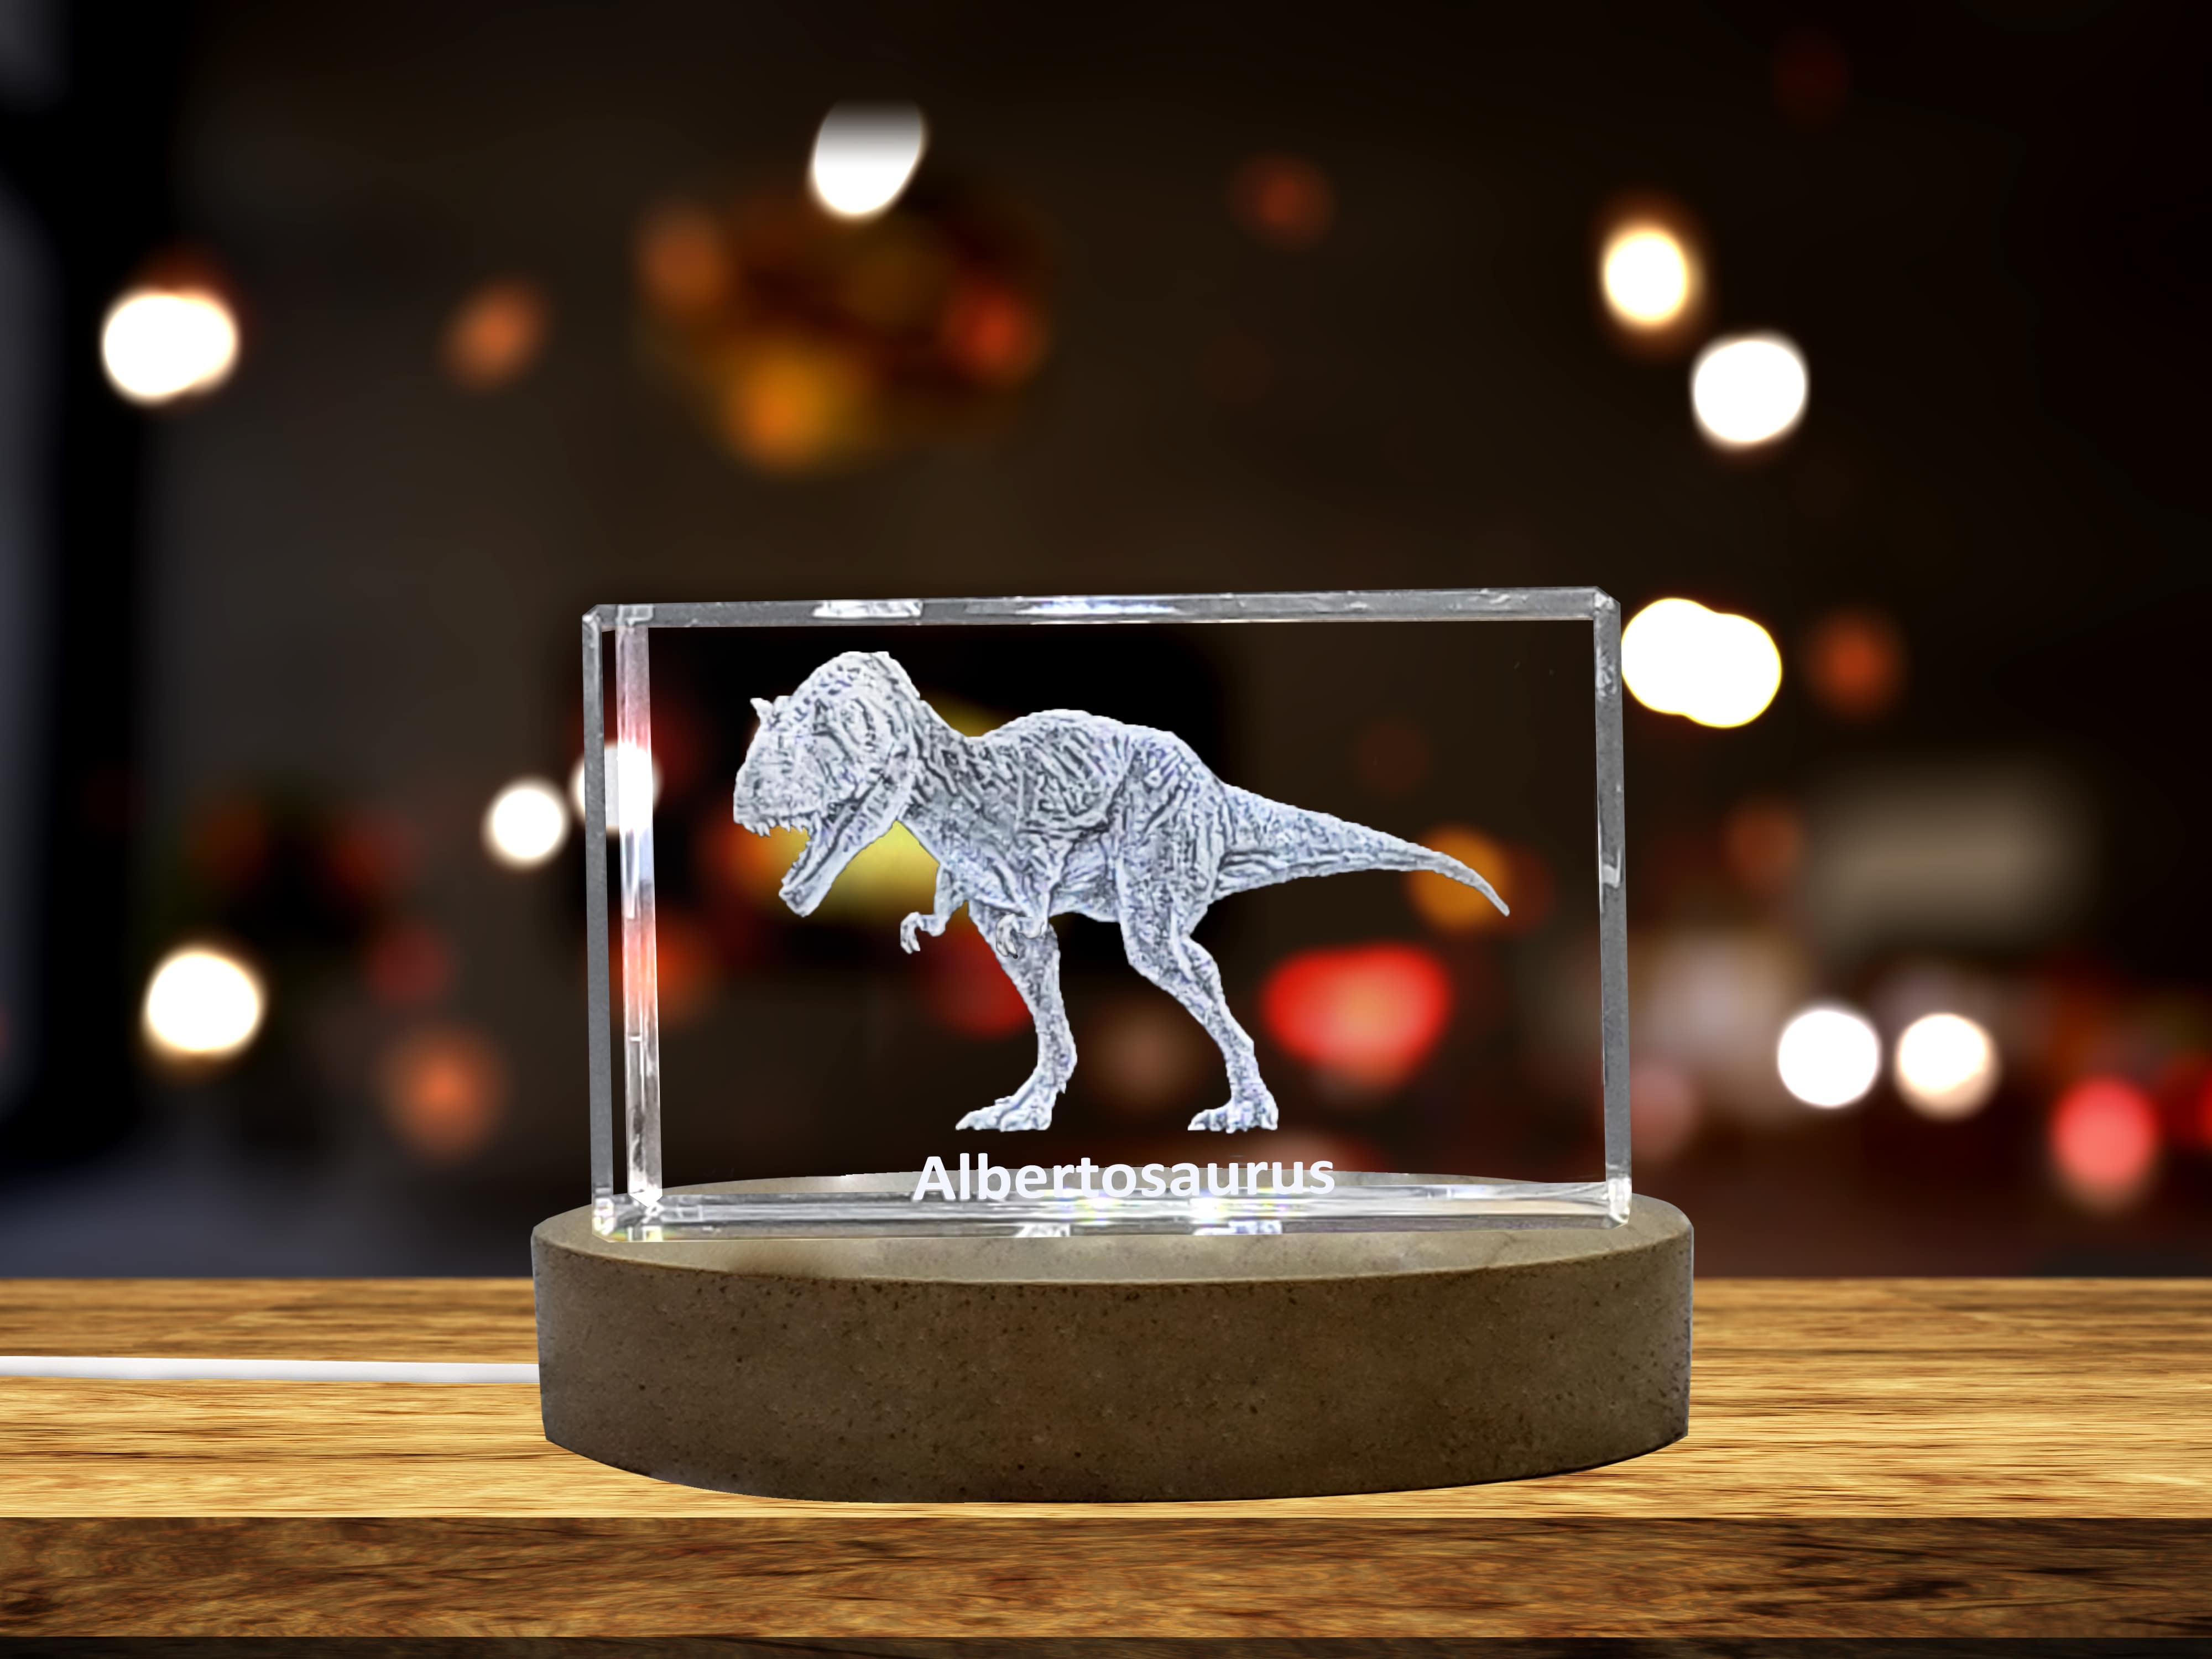 albertosaurus-dinosaur-3d-engraved-crystal-3d-engraved-crystal-keepsake-gift-decor-collectible-souvenir